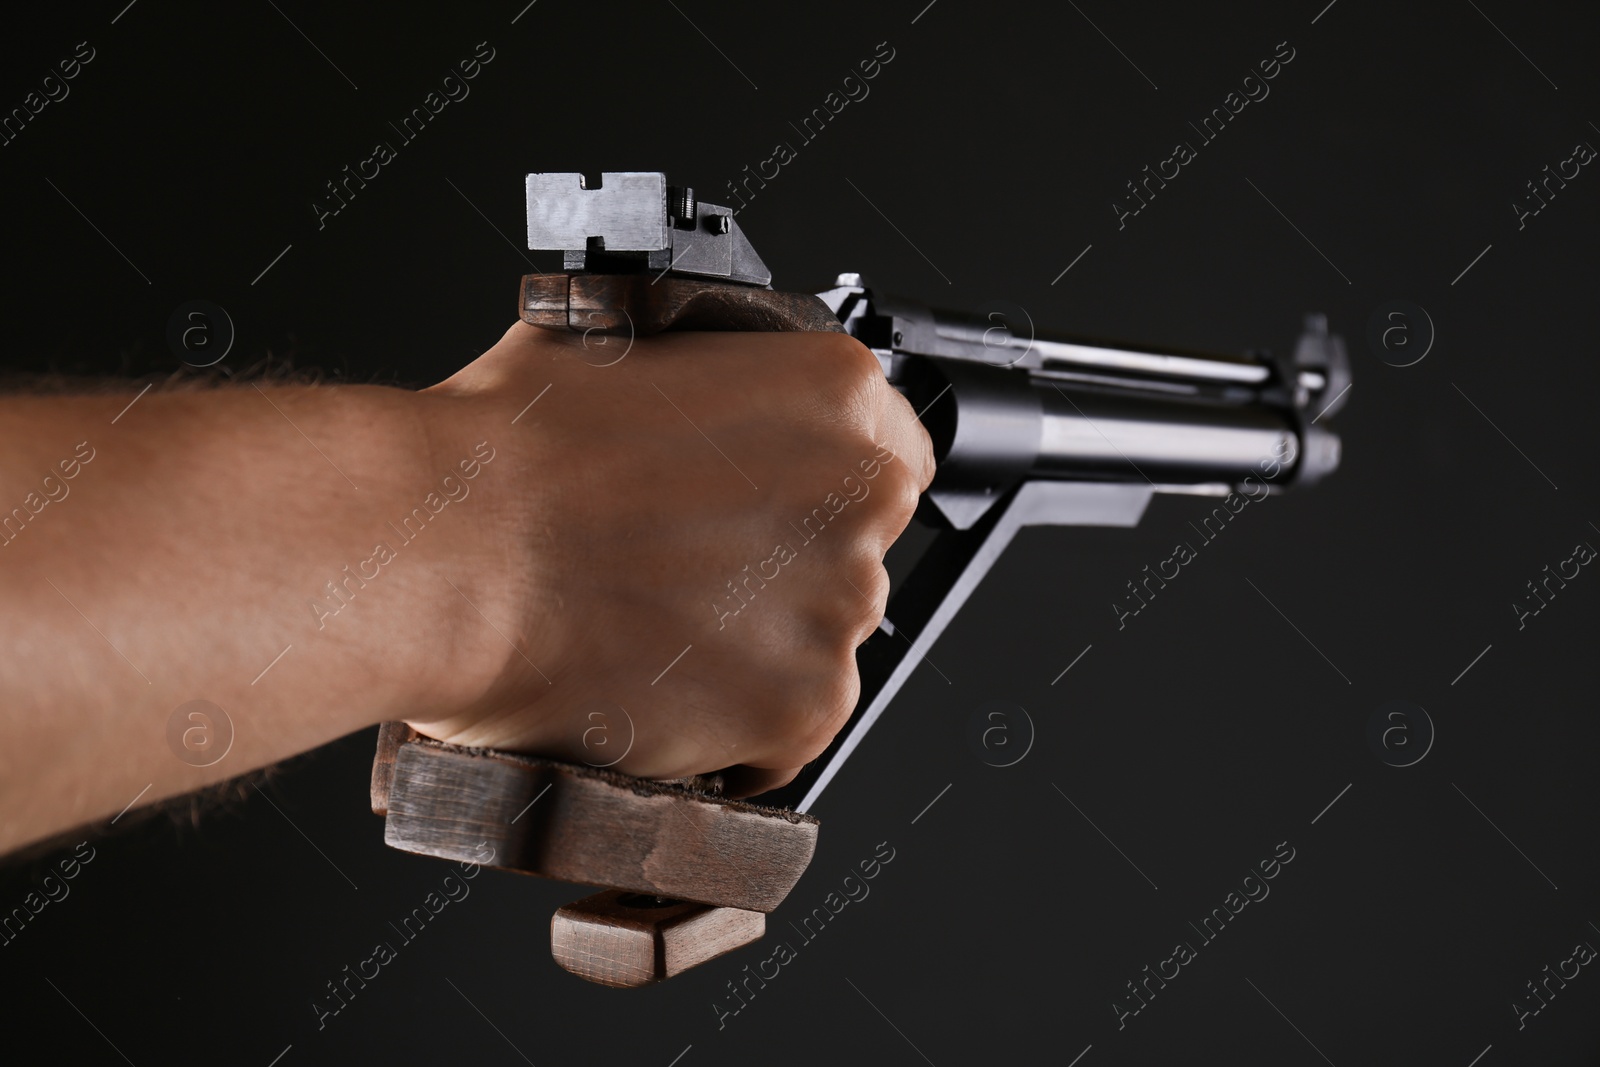 Photo of Gun shooting sport. Man aiming standard pistol on dark background, closeup